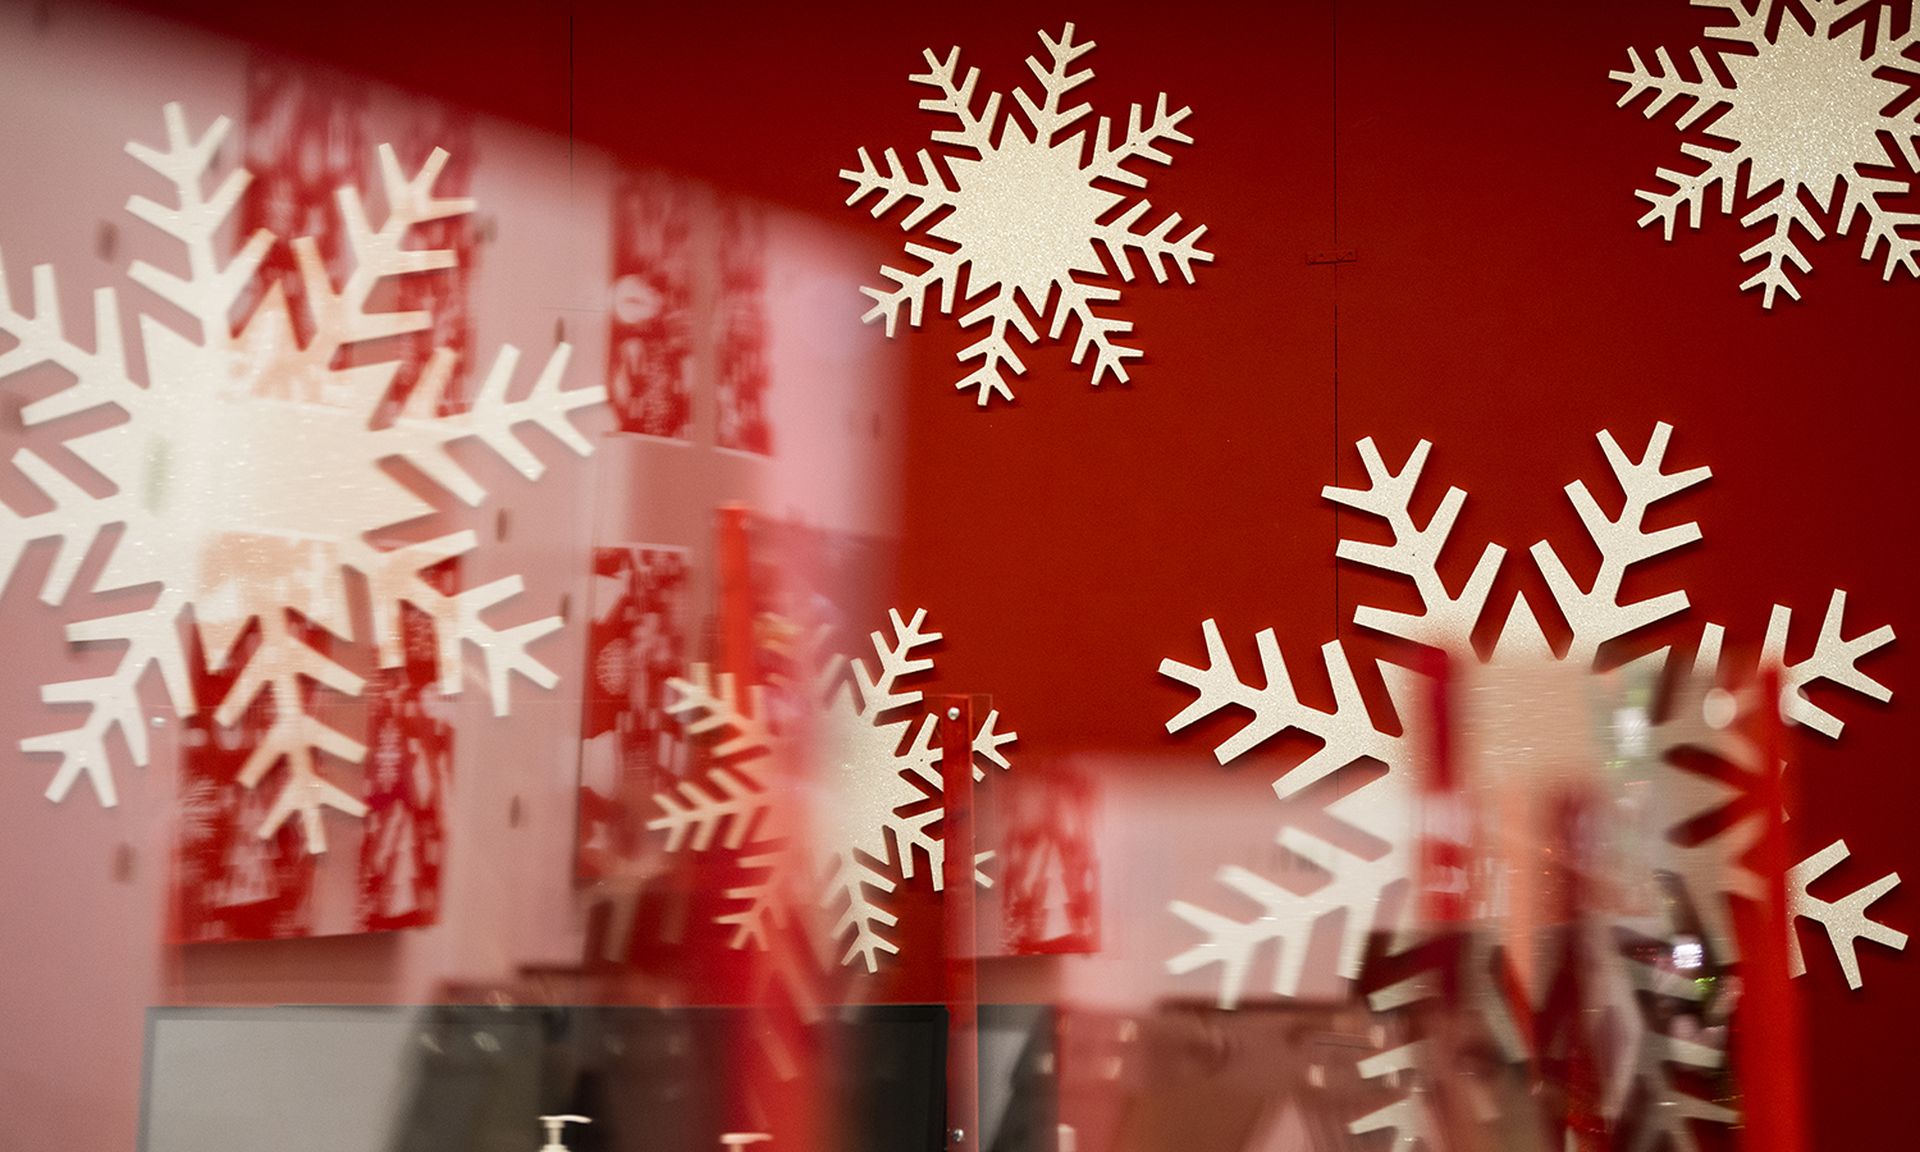 Snowflake decorations are seen through plexiglass.